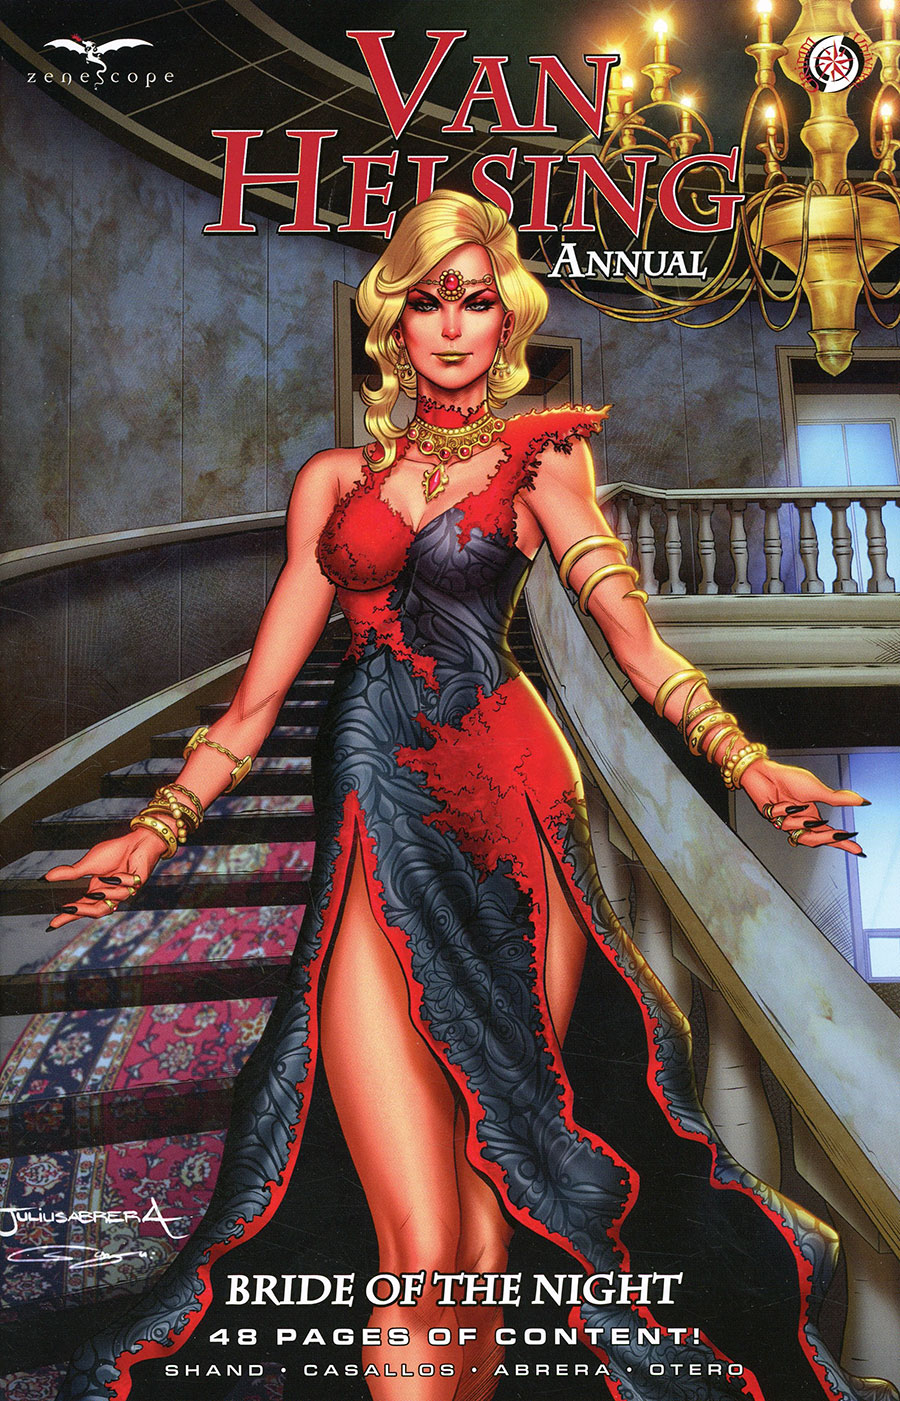 Grimm Fairy Tales Presents Van Helsing Annual Bride Of The Night #1 (One Shot) Cover D Julius Abrera